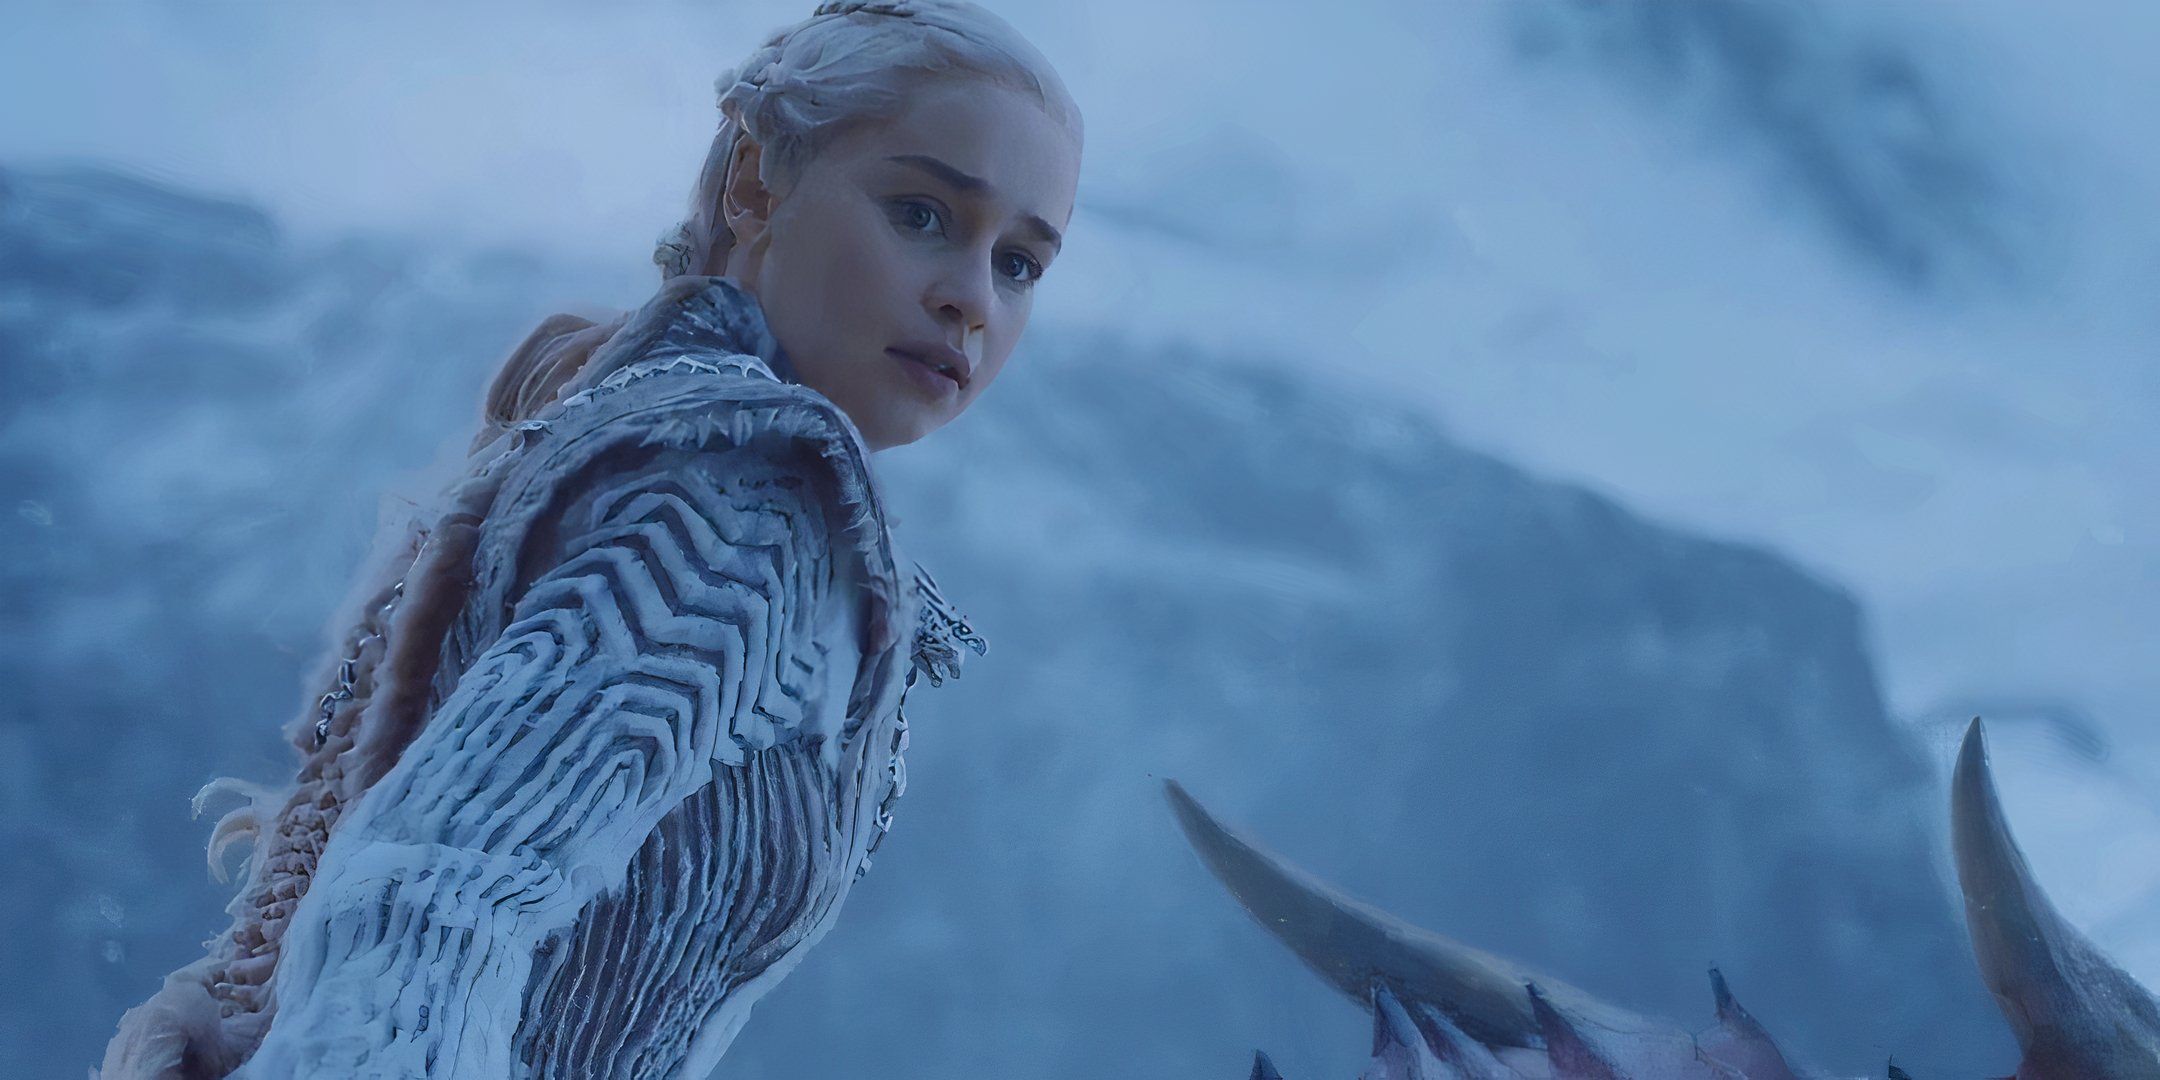 Emilia Clarke as Daenerys looking shocked on Drogon in Game of Thrones season 7 episode 6